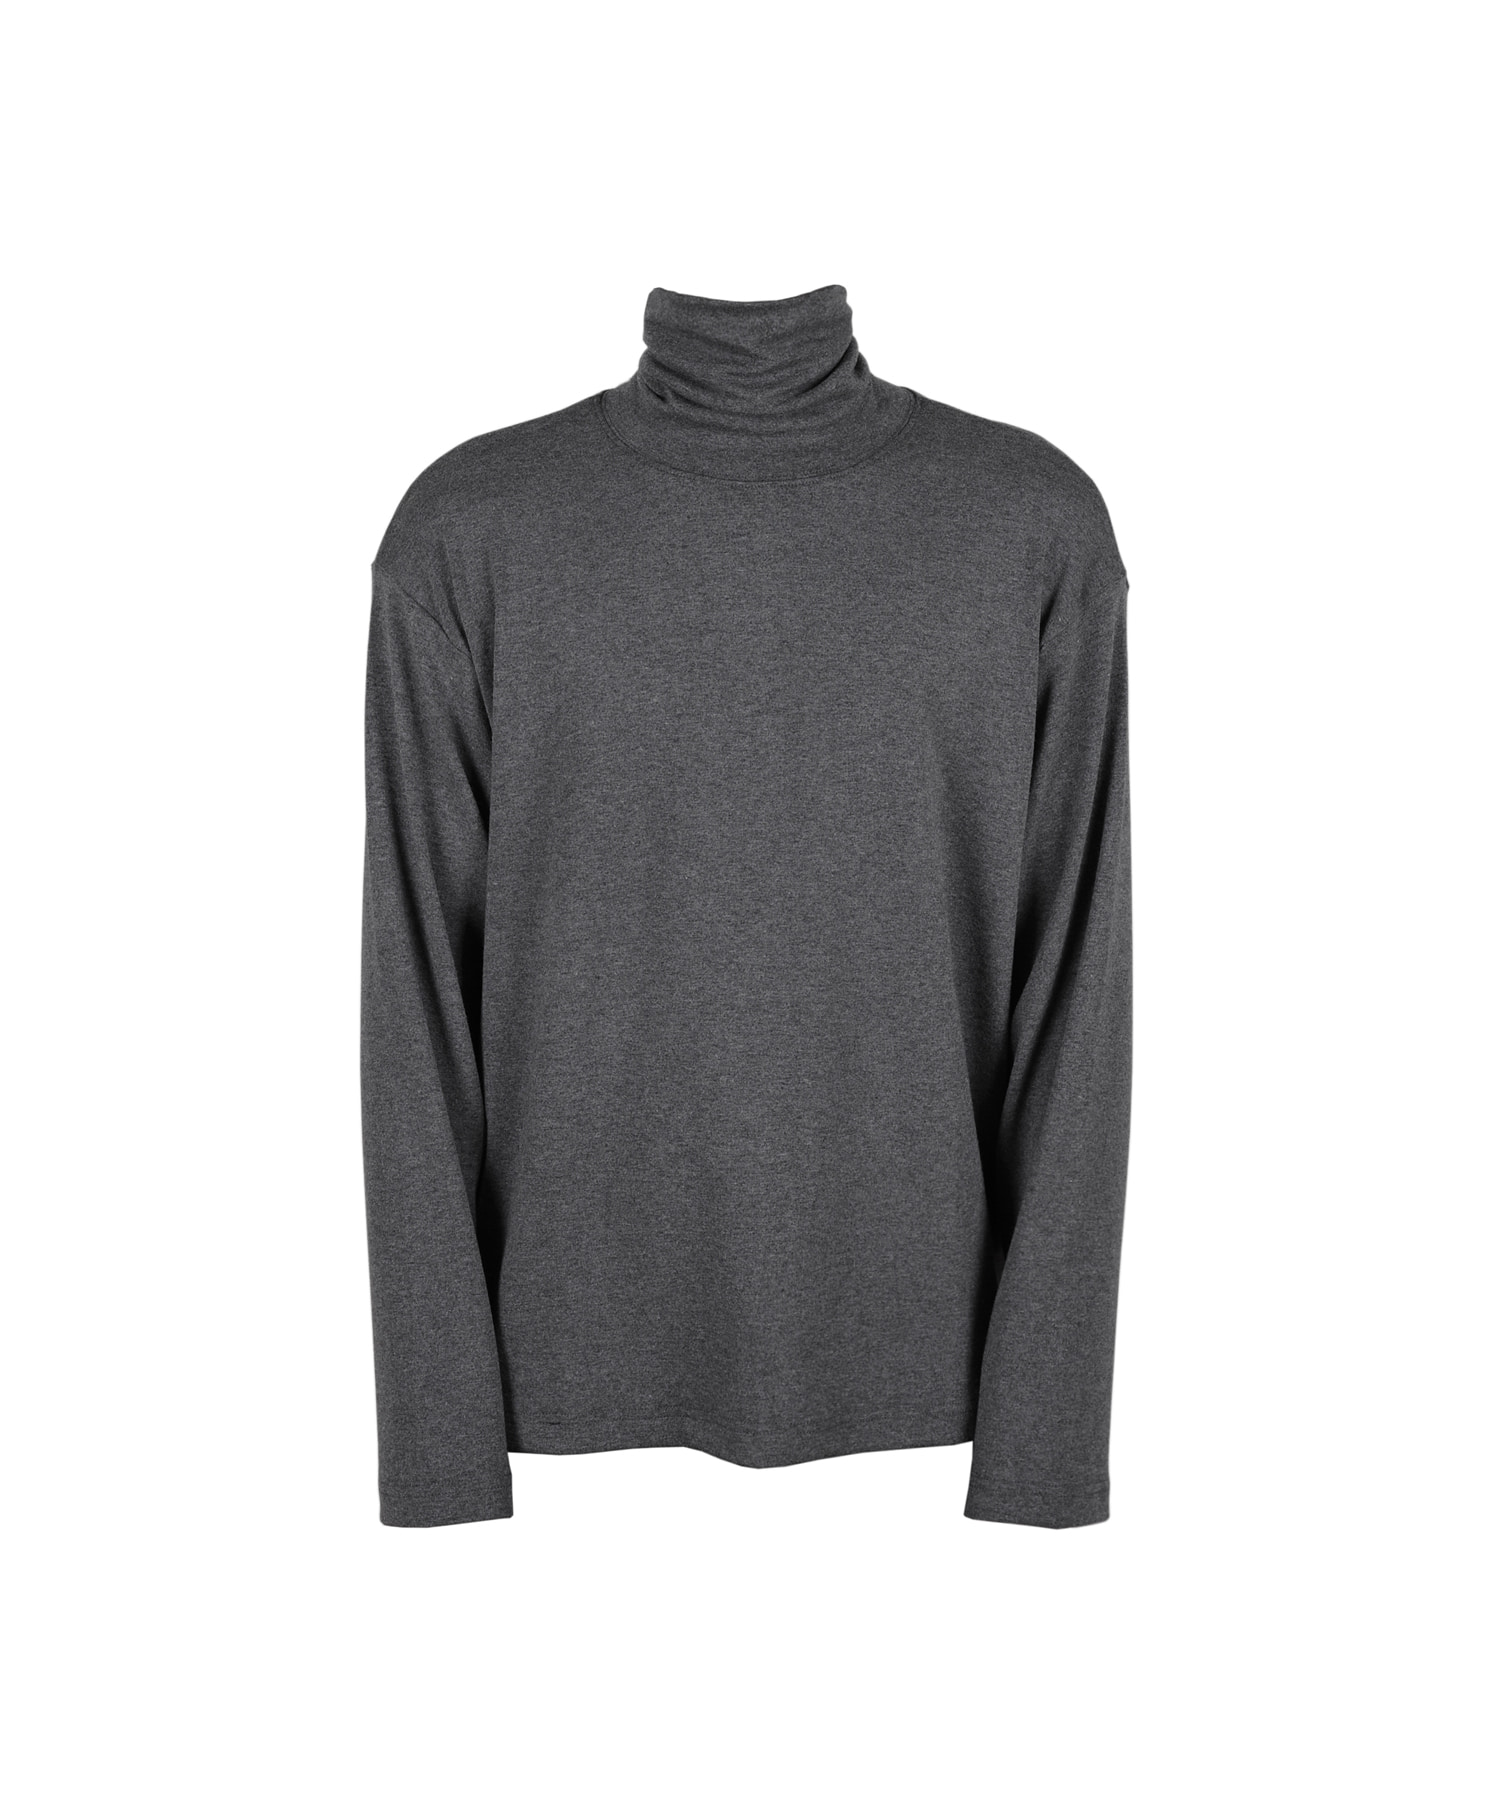 DP-092 (High neck Tshirts grey)